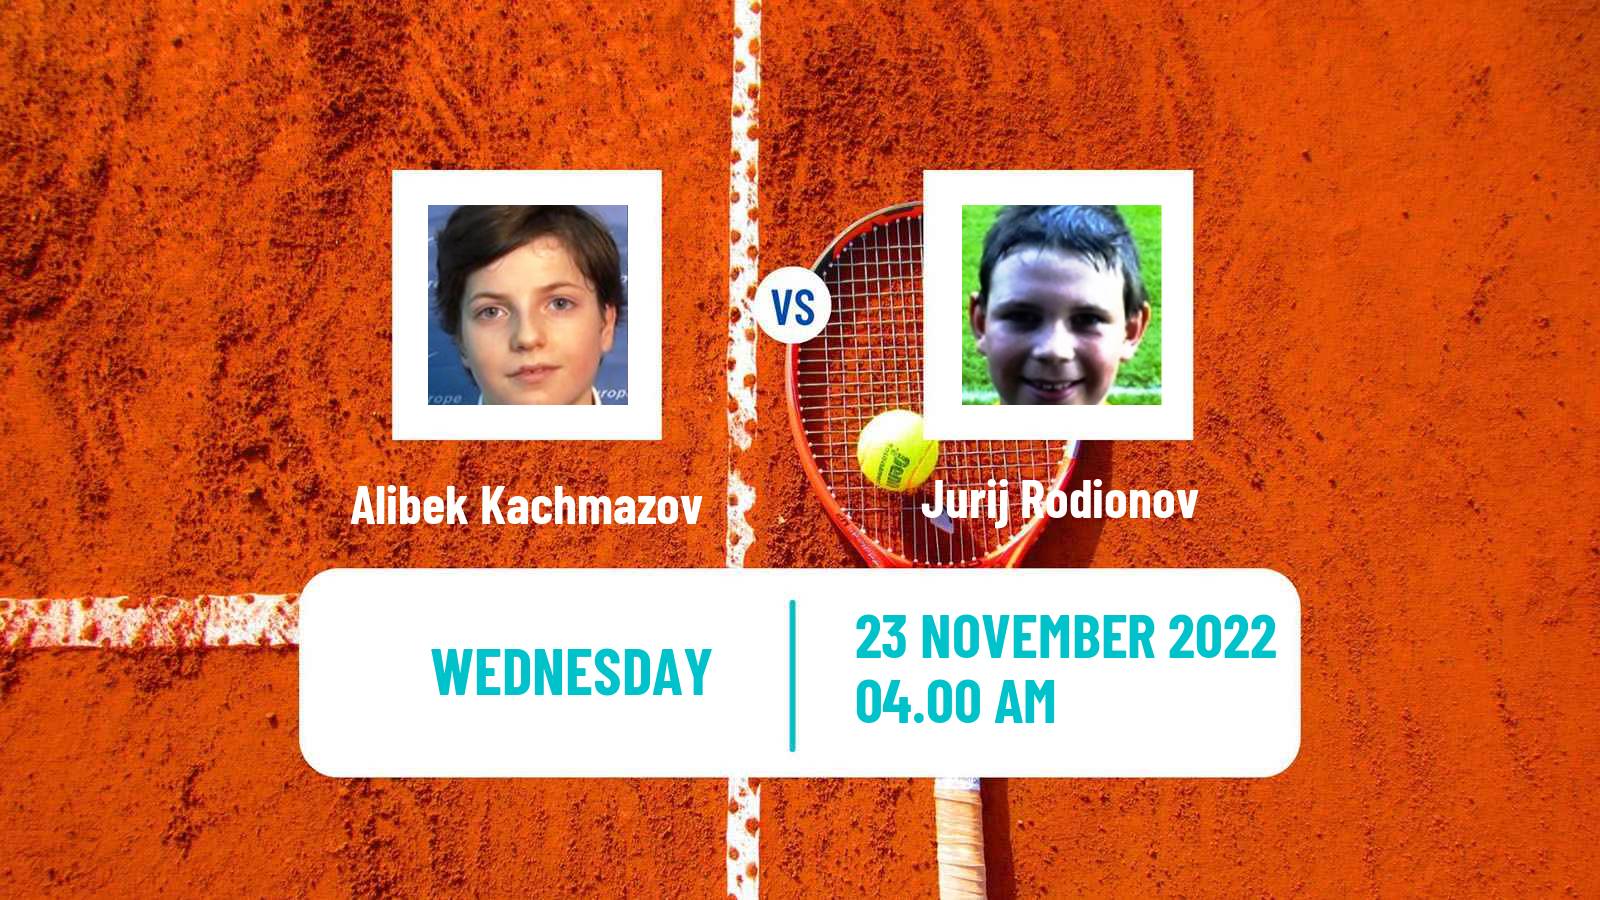 Tennis ATP Challenger Alibek Kachmazov - Jurij Rodionov